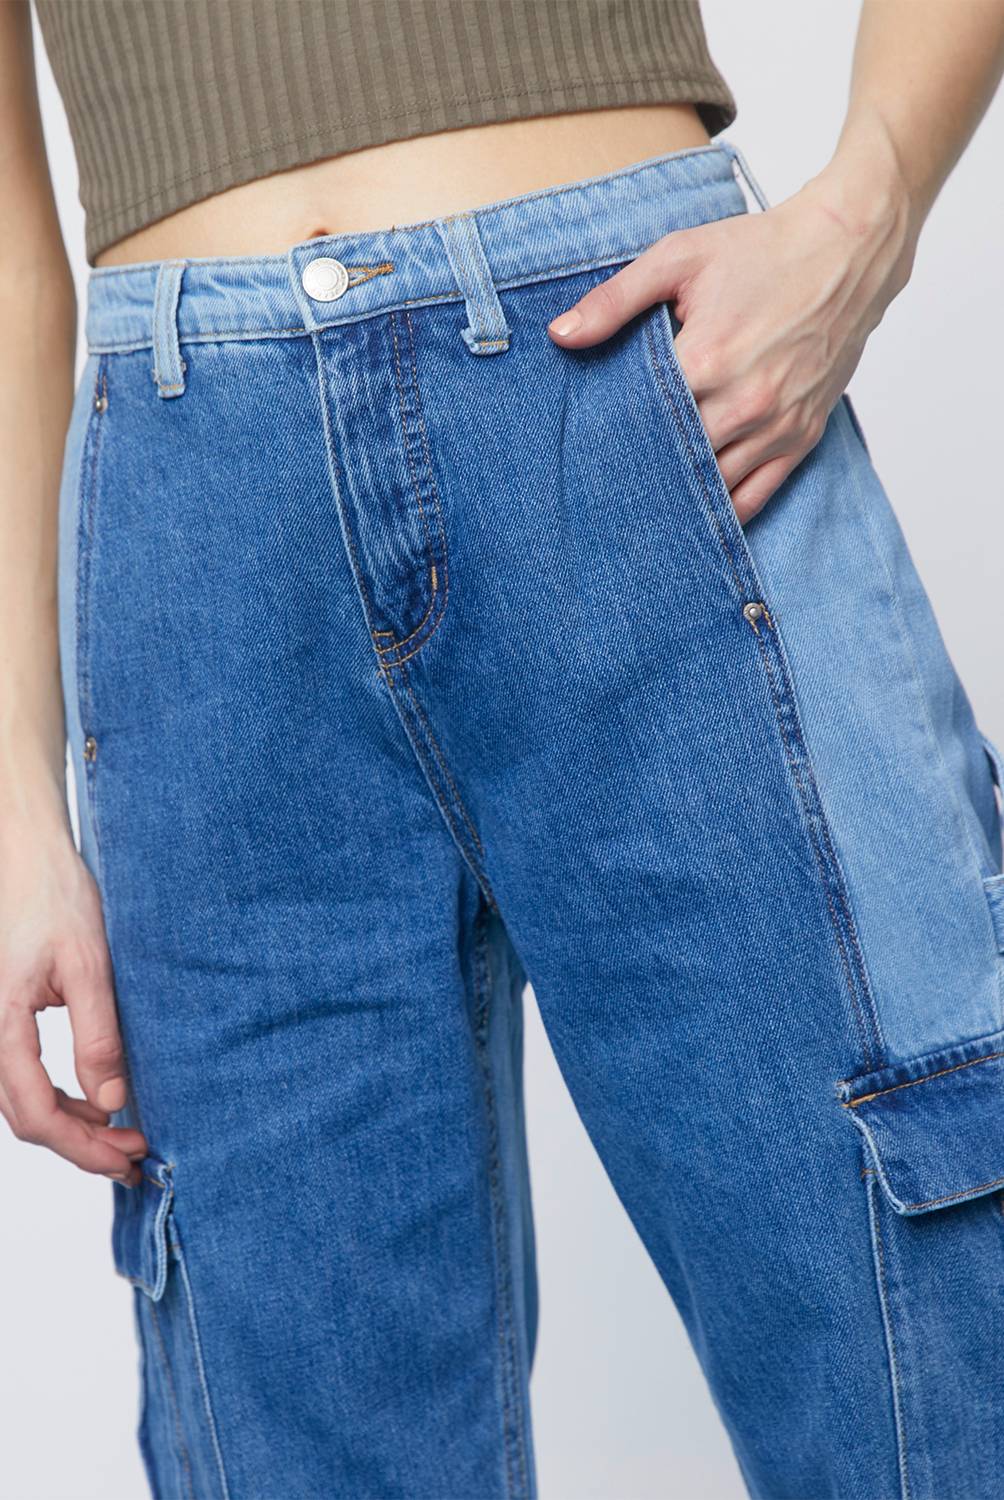 AMERICANINO - Americanino Jeans Cargo Tiro Alto Mujer